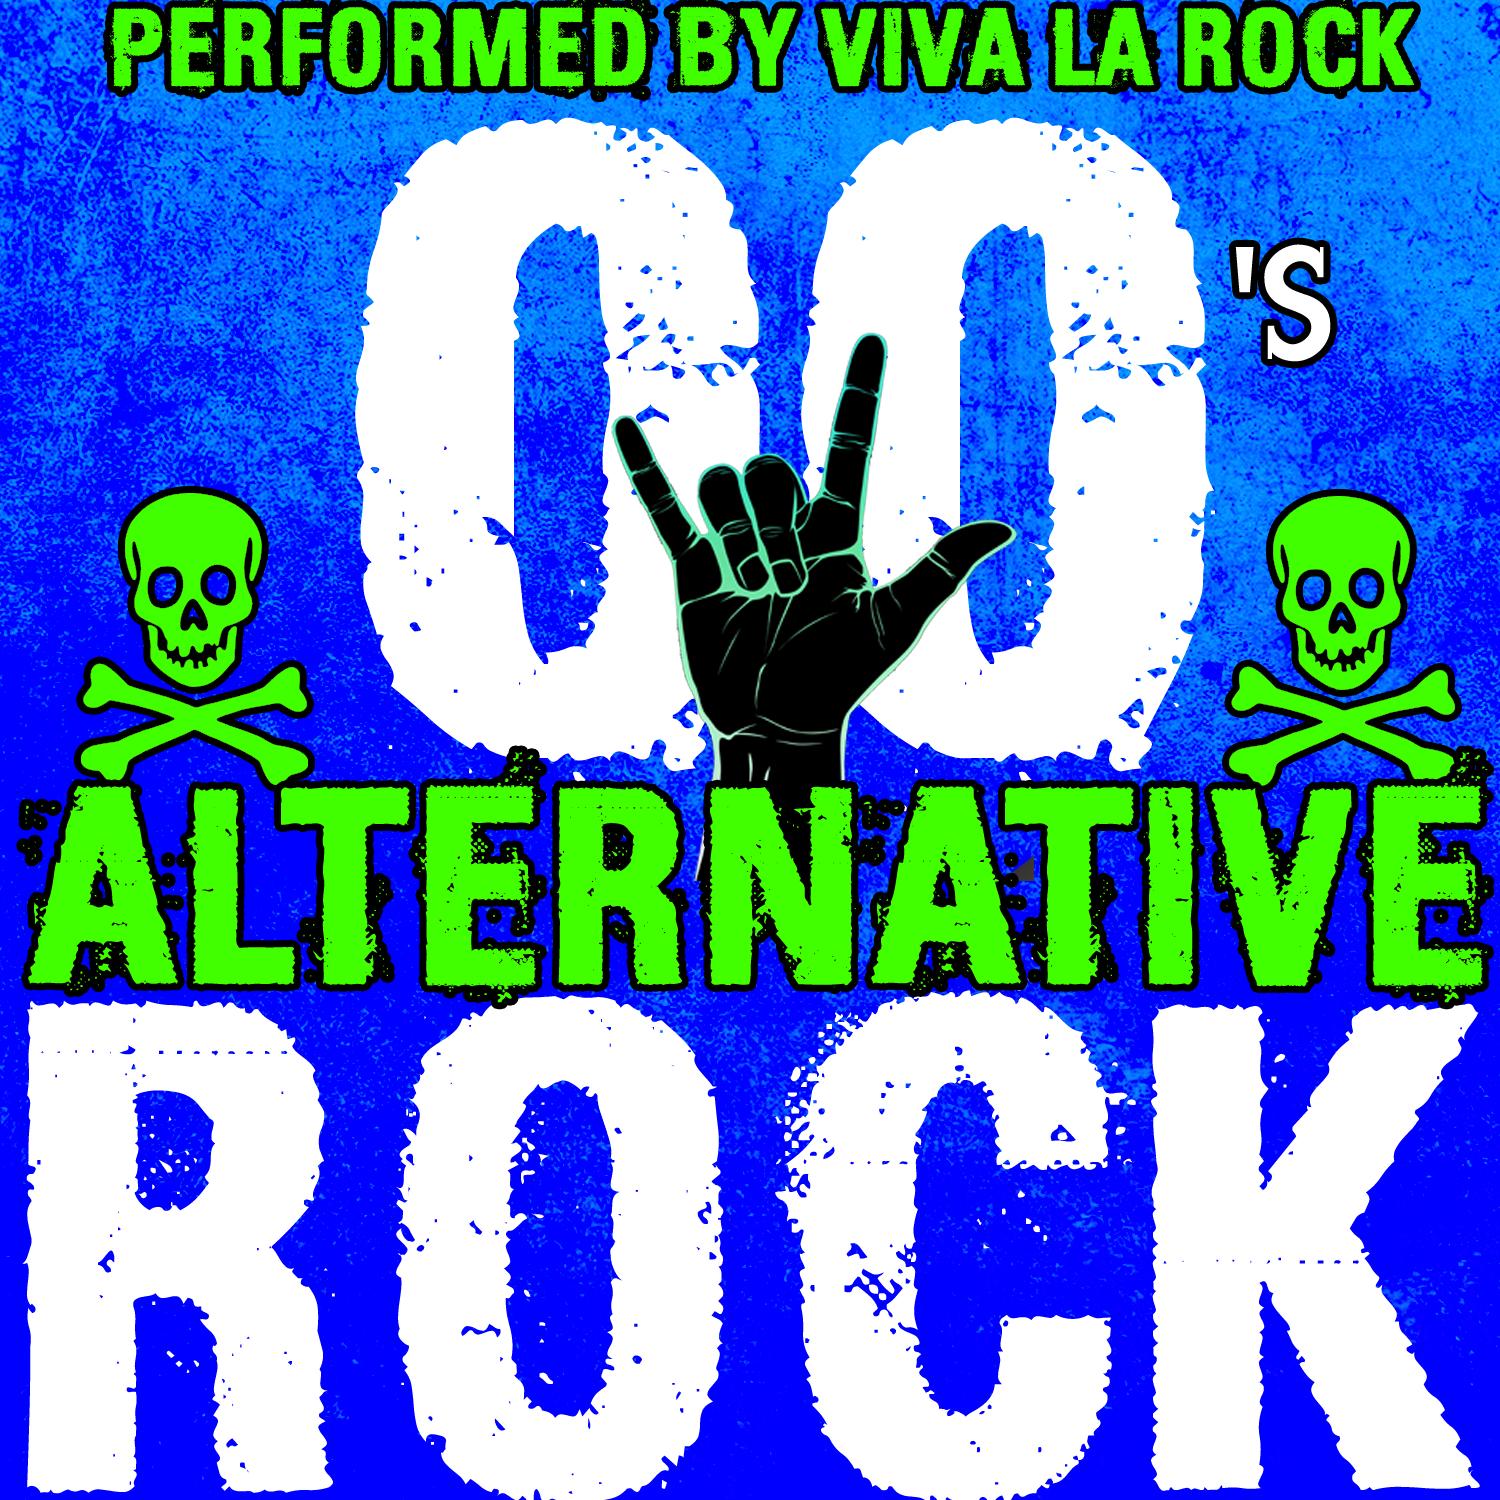 00's Alternative Rock